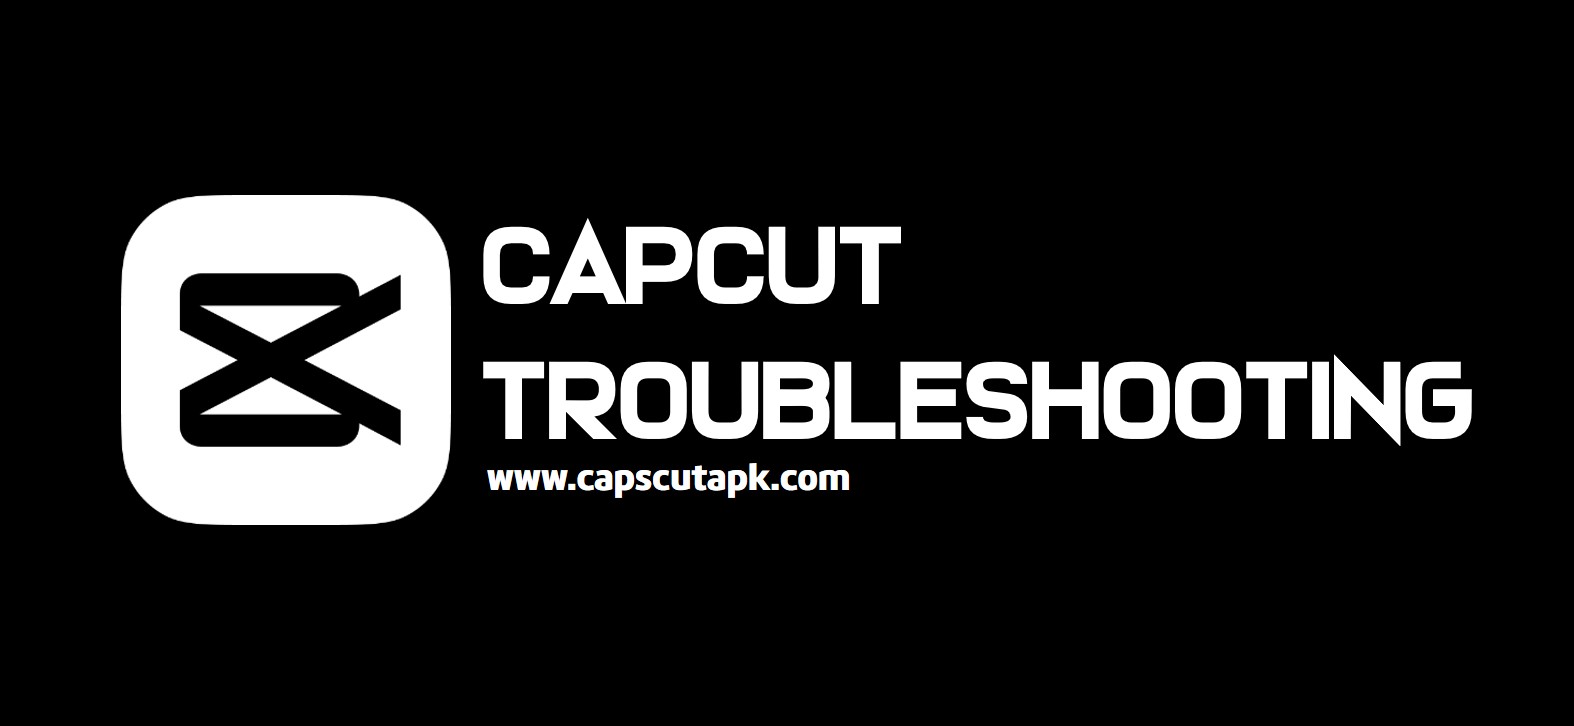 capcut troubleshooting